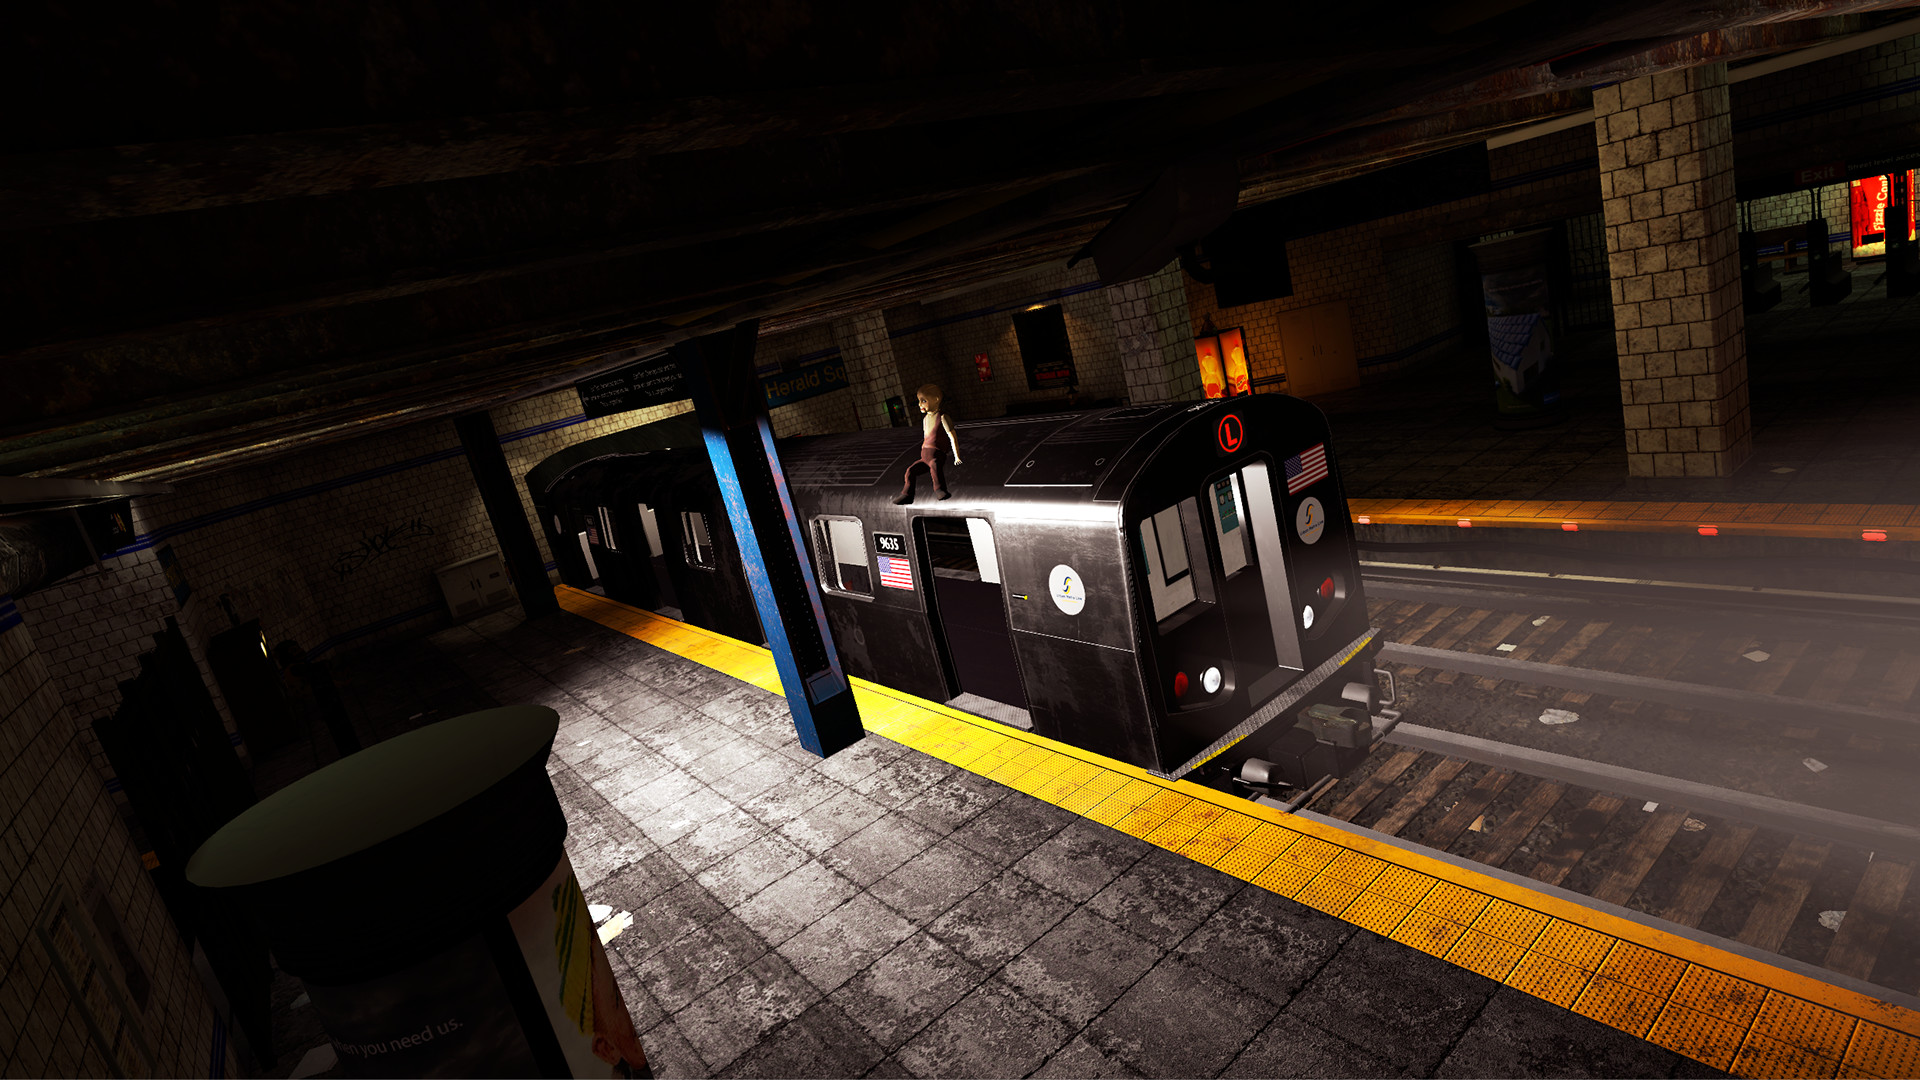 Death Train игра. Death Train VR. VR игра про поезда. Unsafe игра. Игра симулятор хоррора